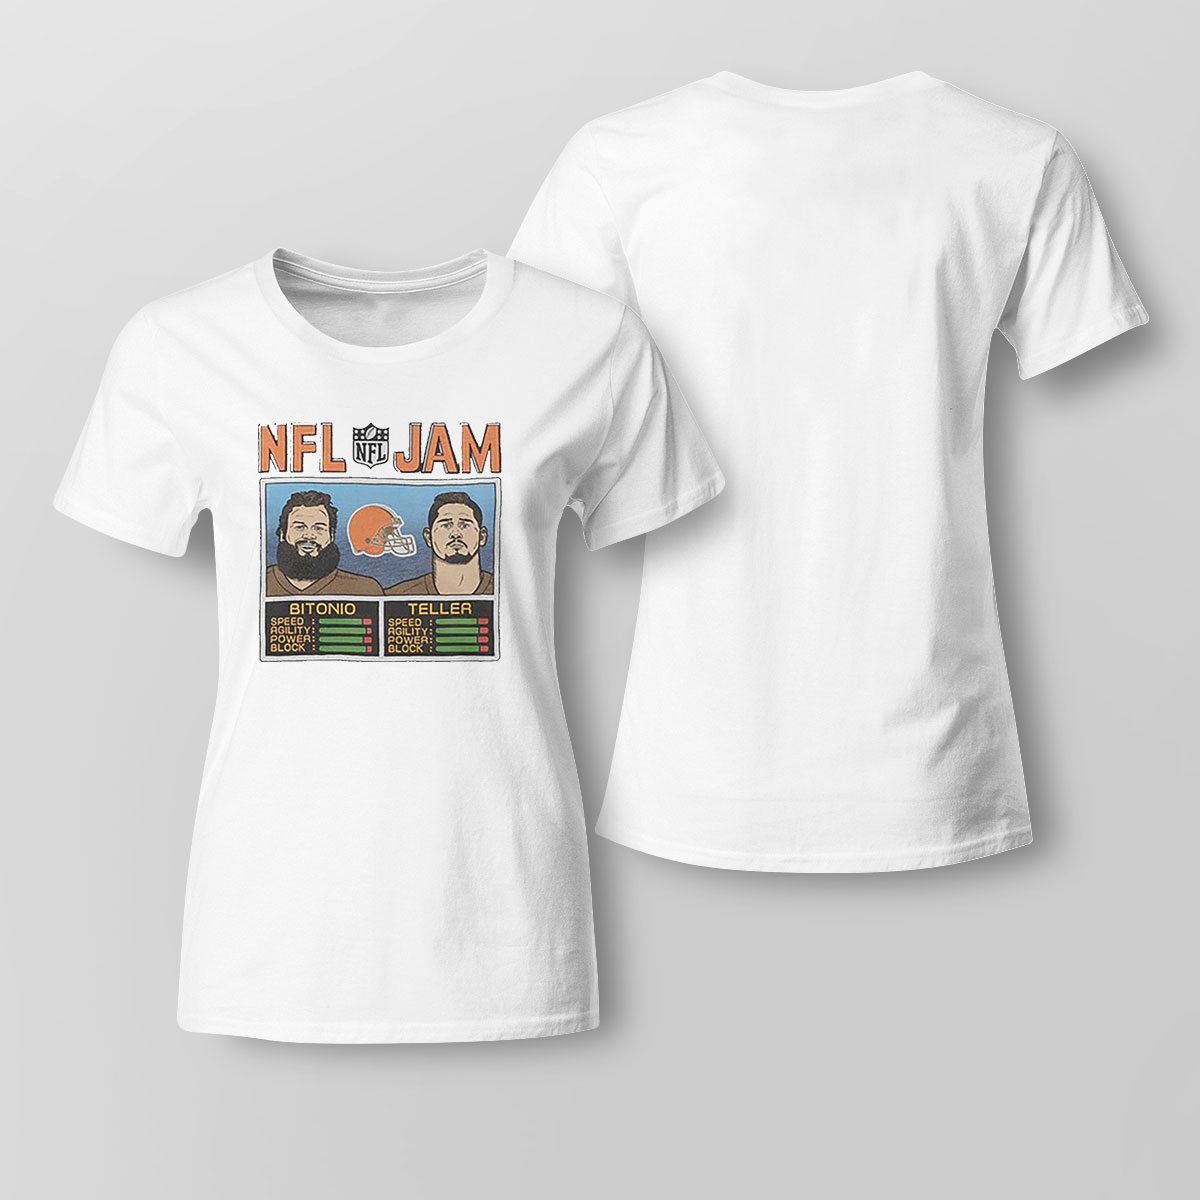 Nfl Jam Cleveland Browns Bitonio And Teller Shirt